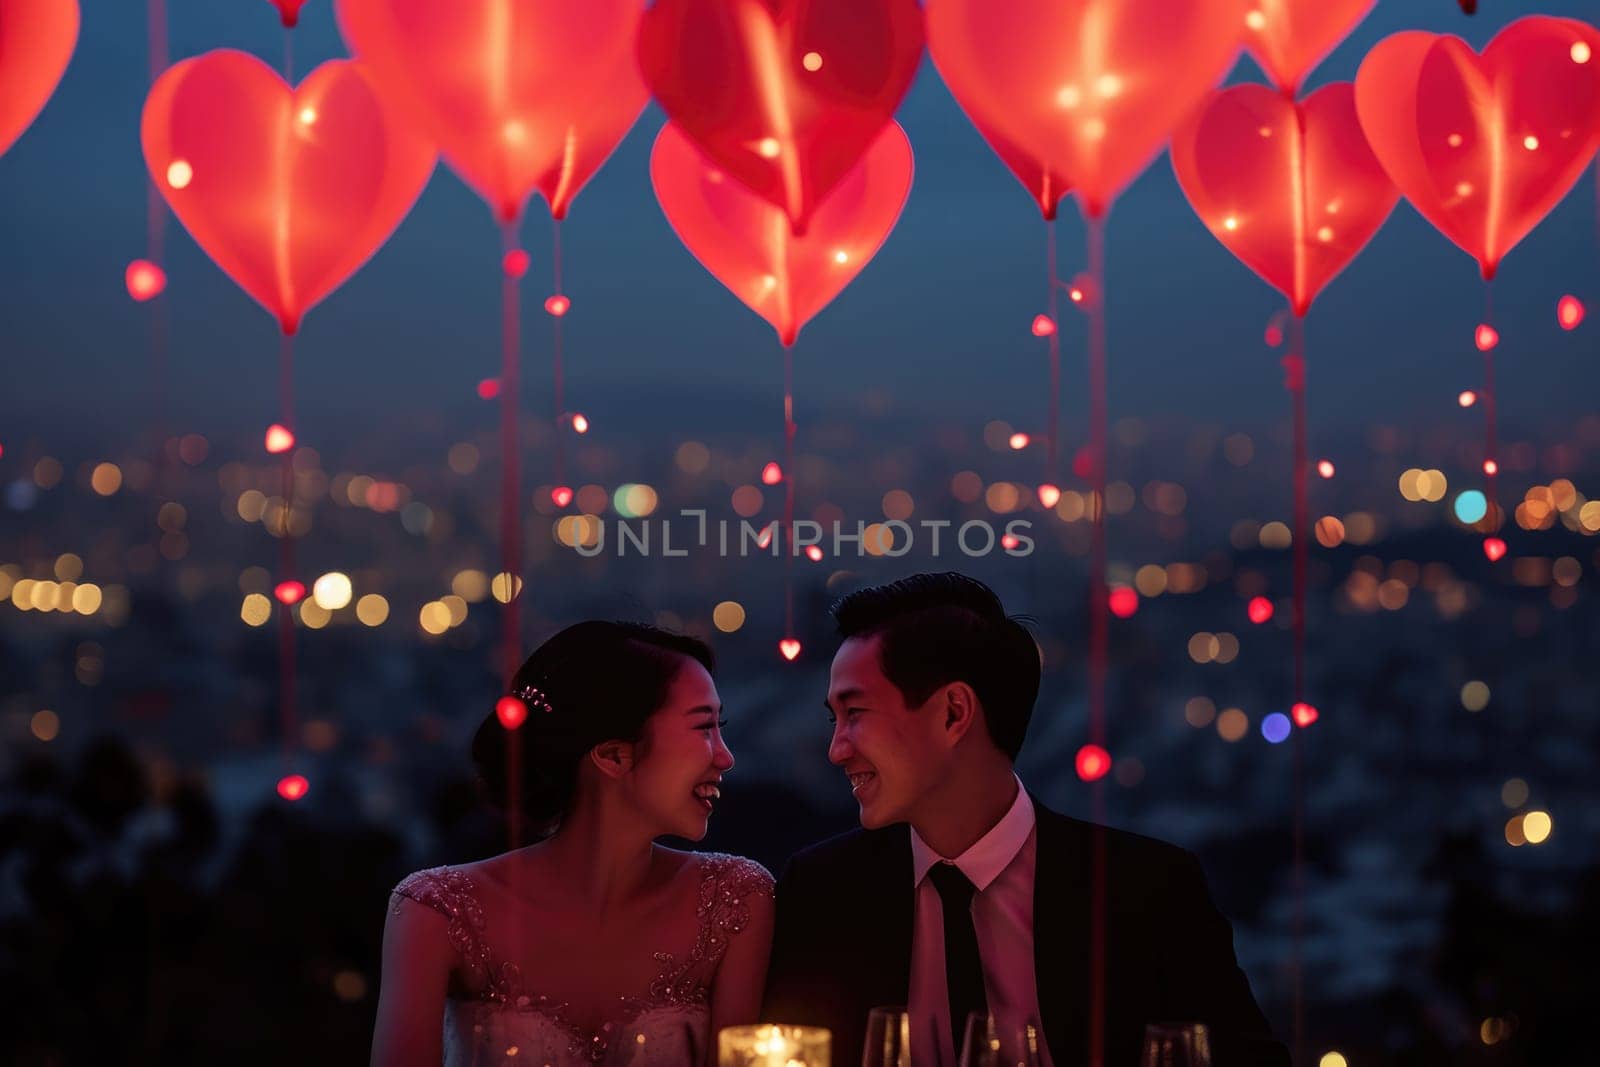 couple in valentines day night at romantic restaurant celebrating love pragma by biancoblue